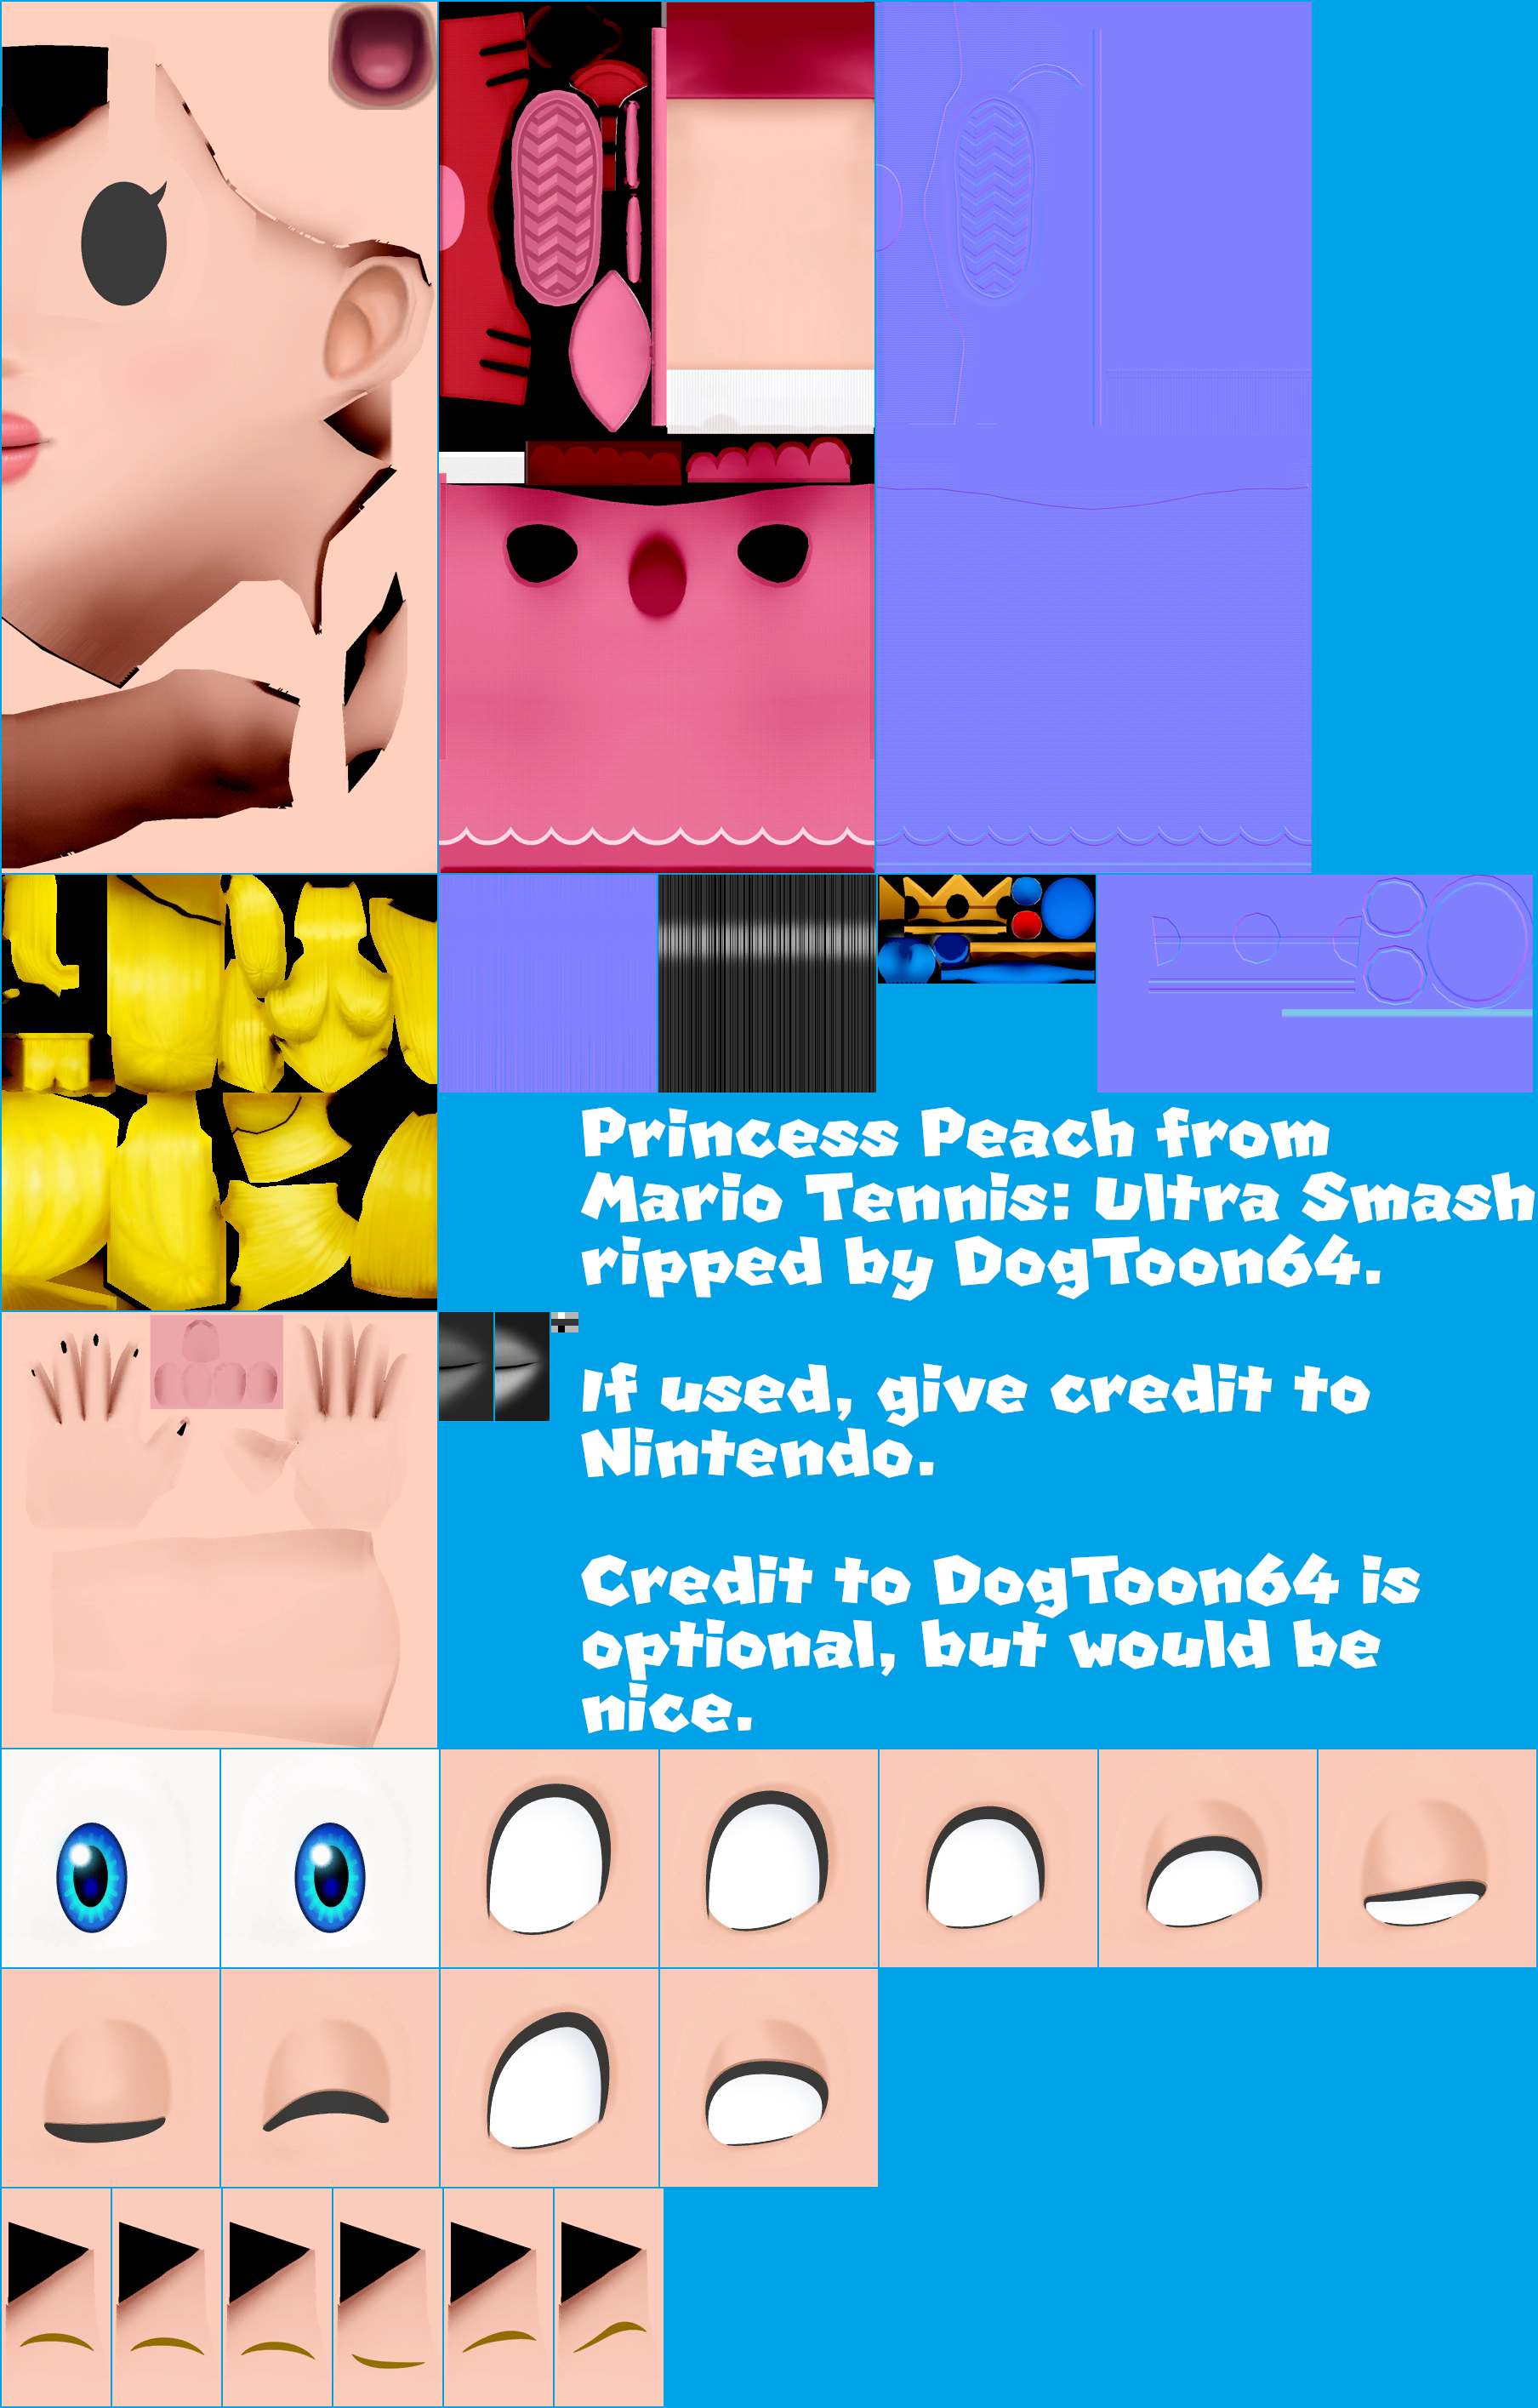 Mario Tennis: Ultra Smash - Princess Peach